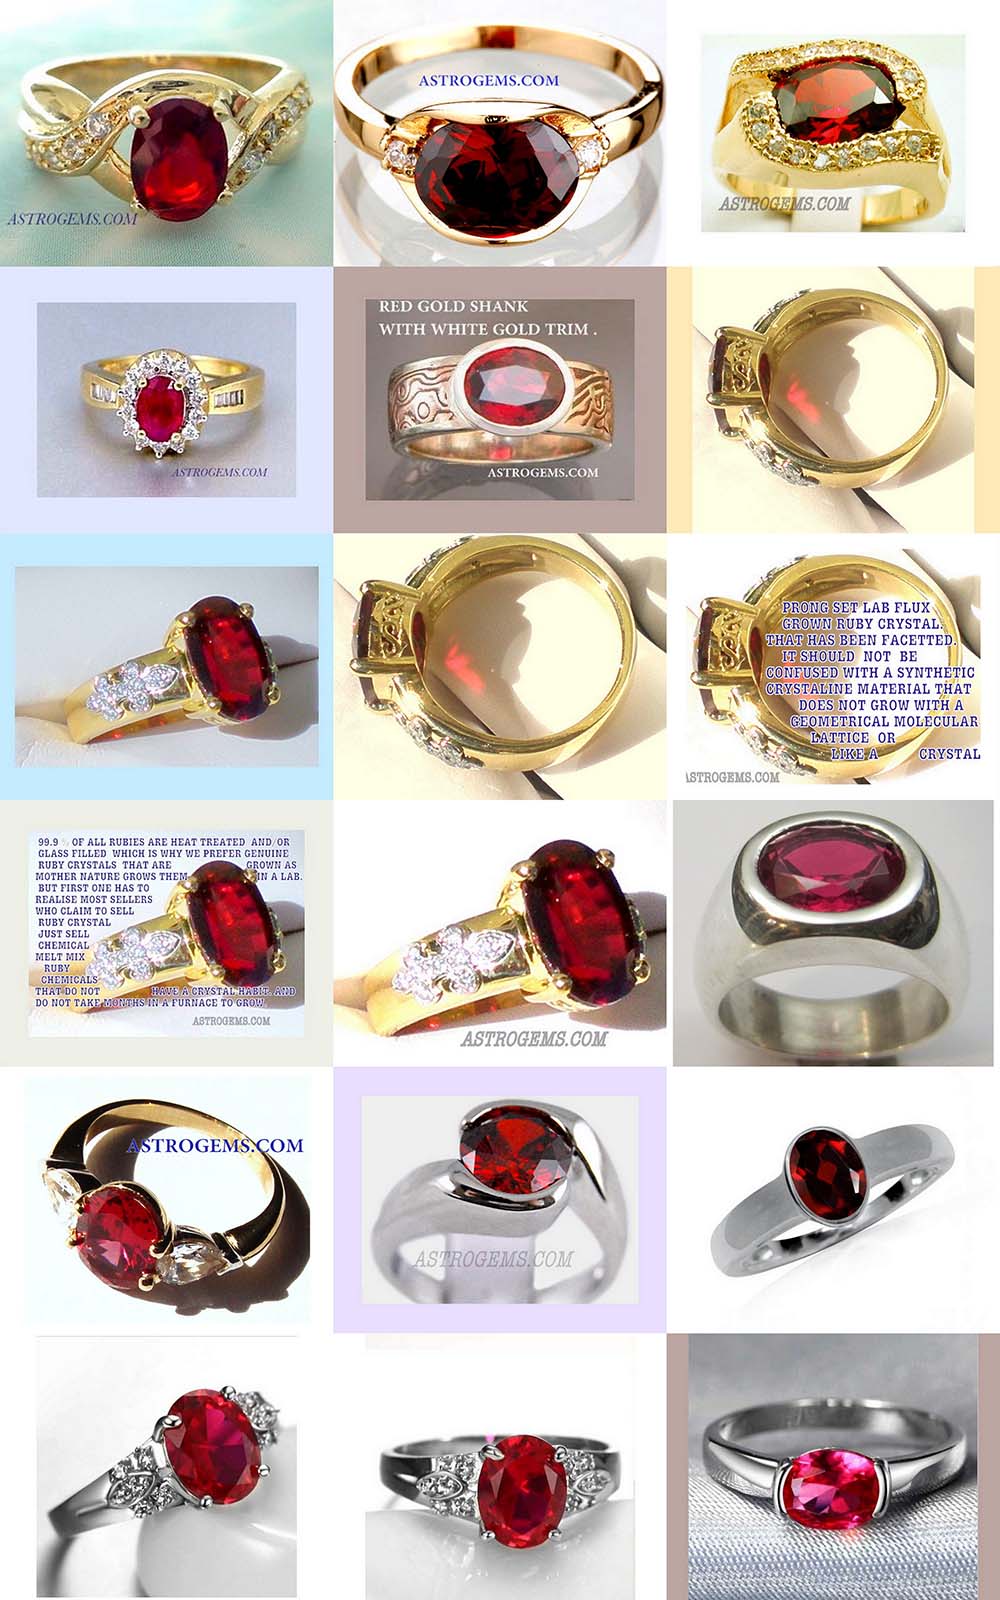 Astrogems can make custom ayurvedic Ruby rings.